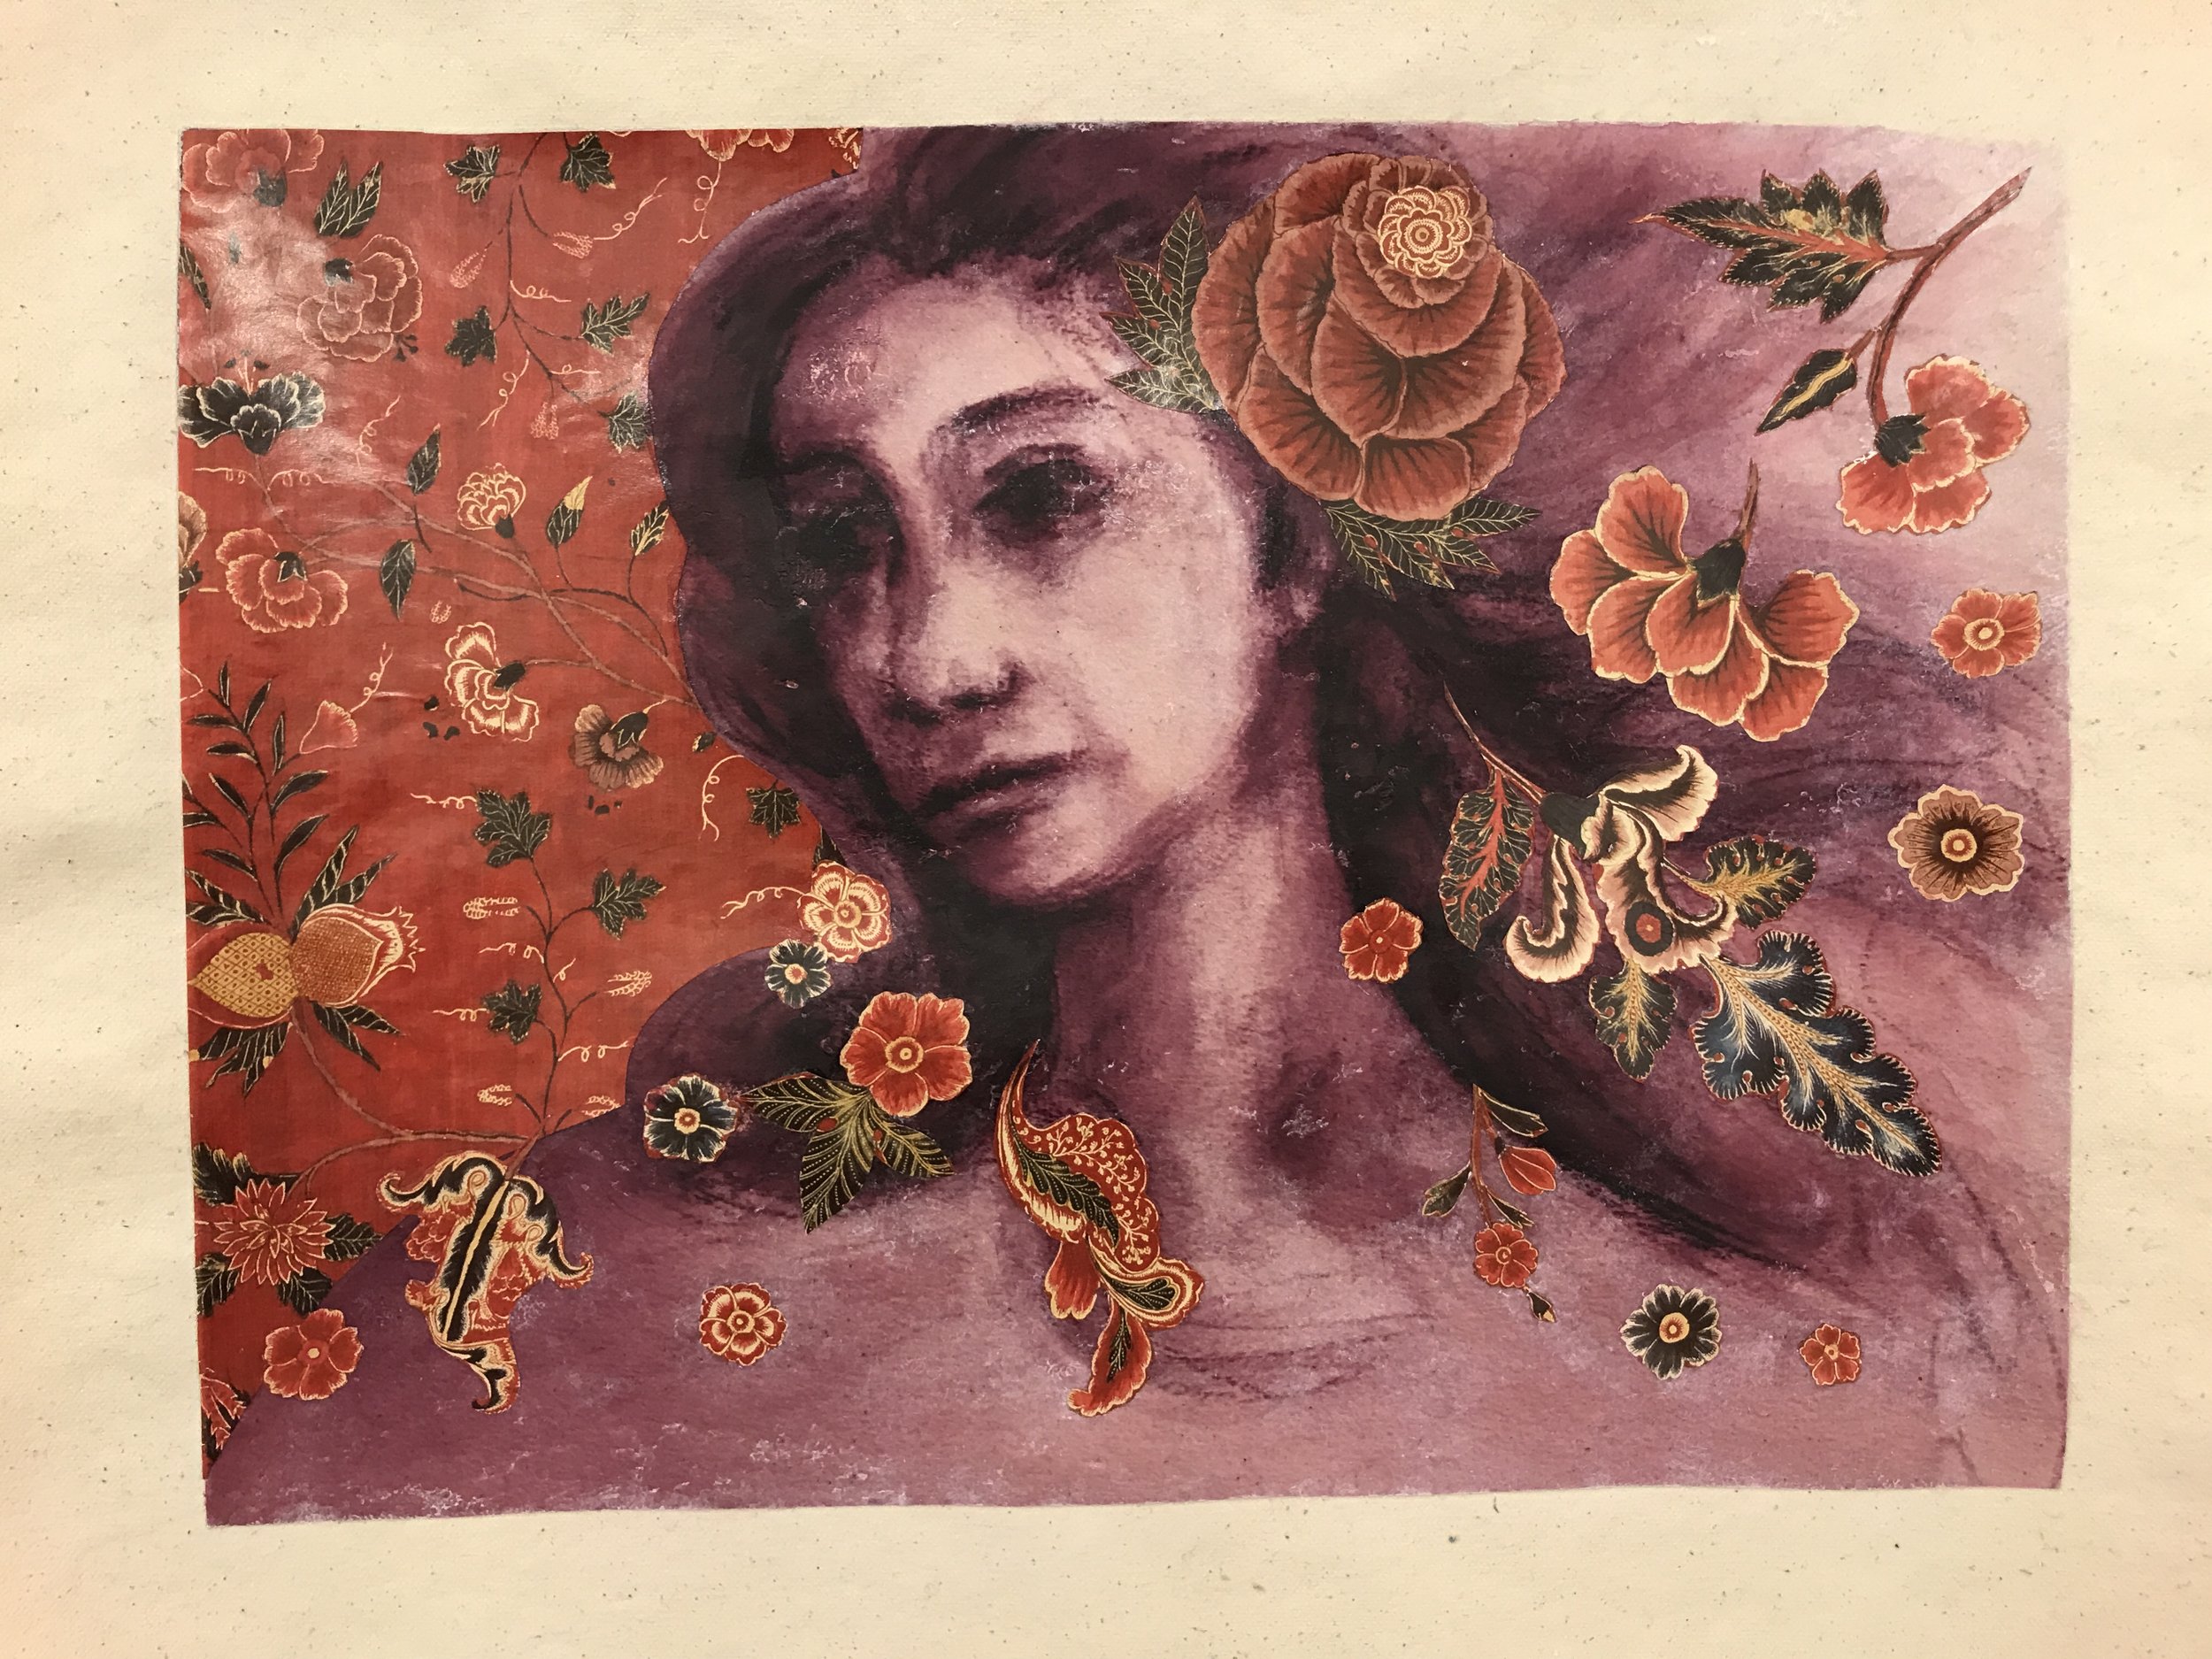 2. Tapestry Collage — unframed / in progress